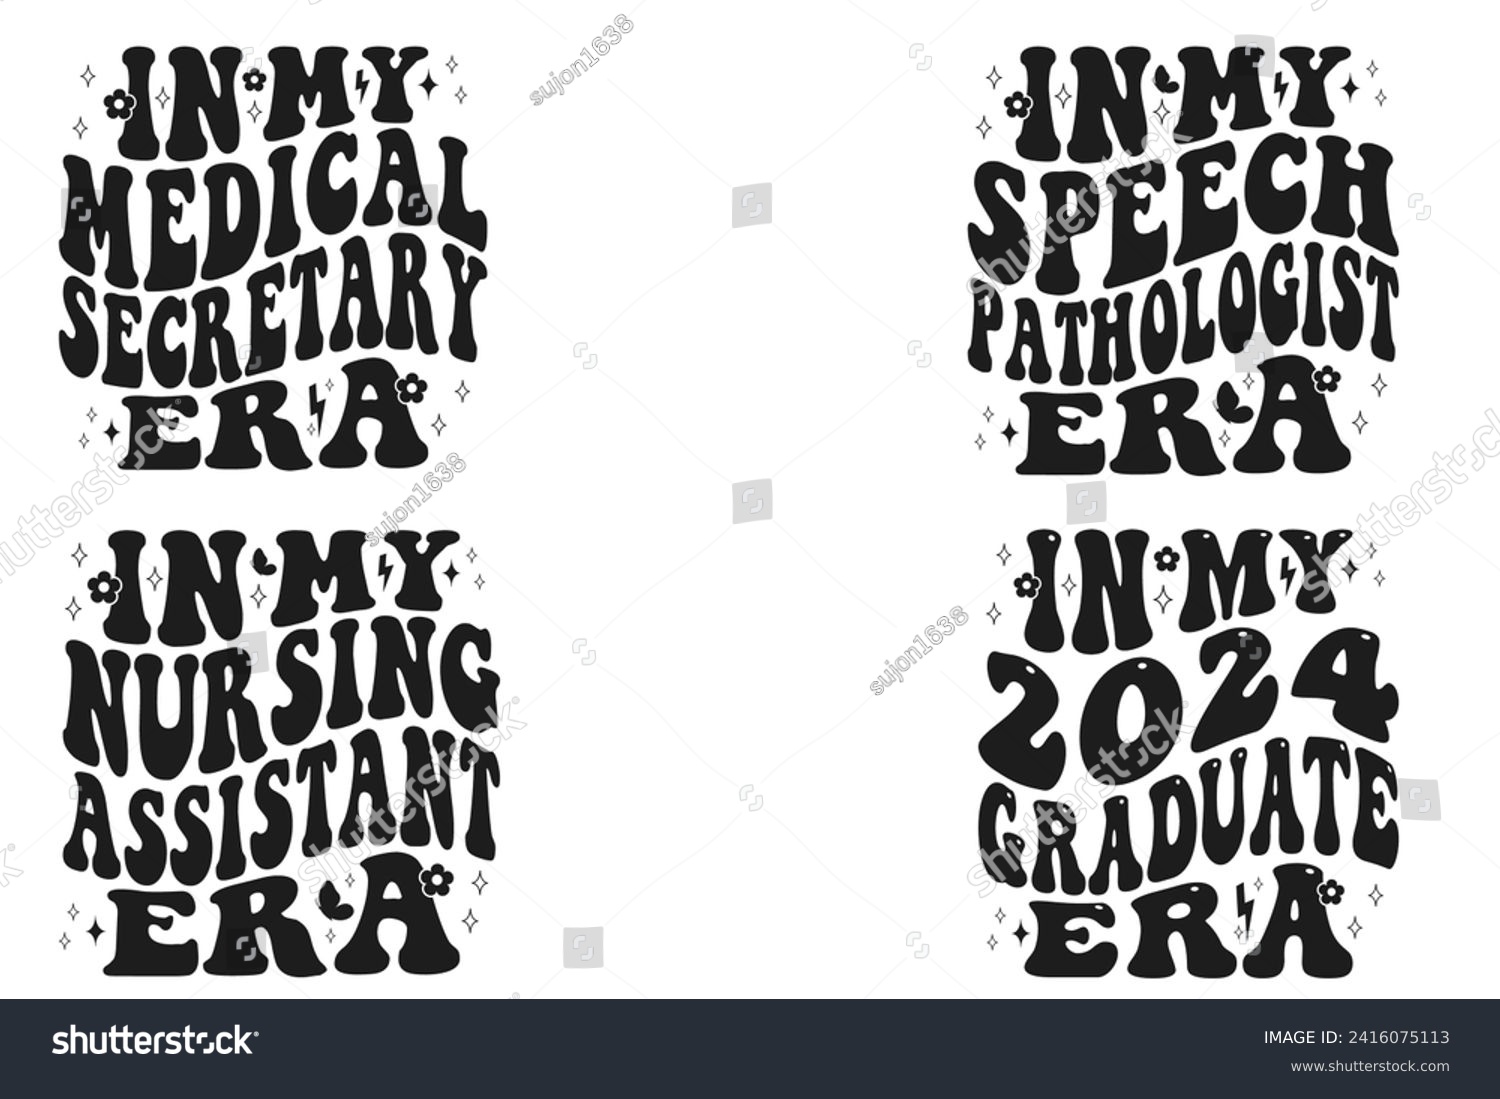 SVG of In My Medical Secretary Era, In My Speech Pathologist Era, In My Nursing Assistant Era, In My 2024 Graduate Era Retro T-shirt svg